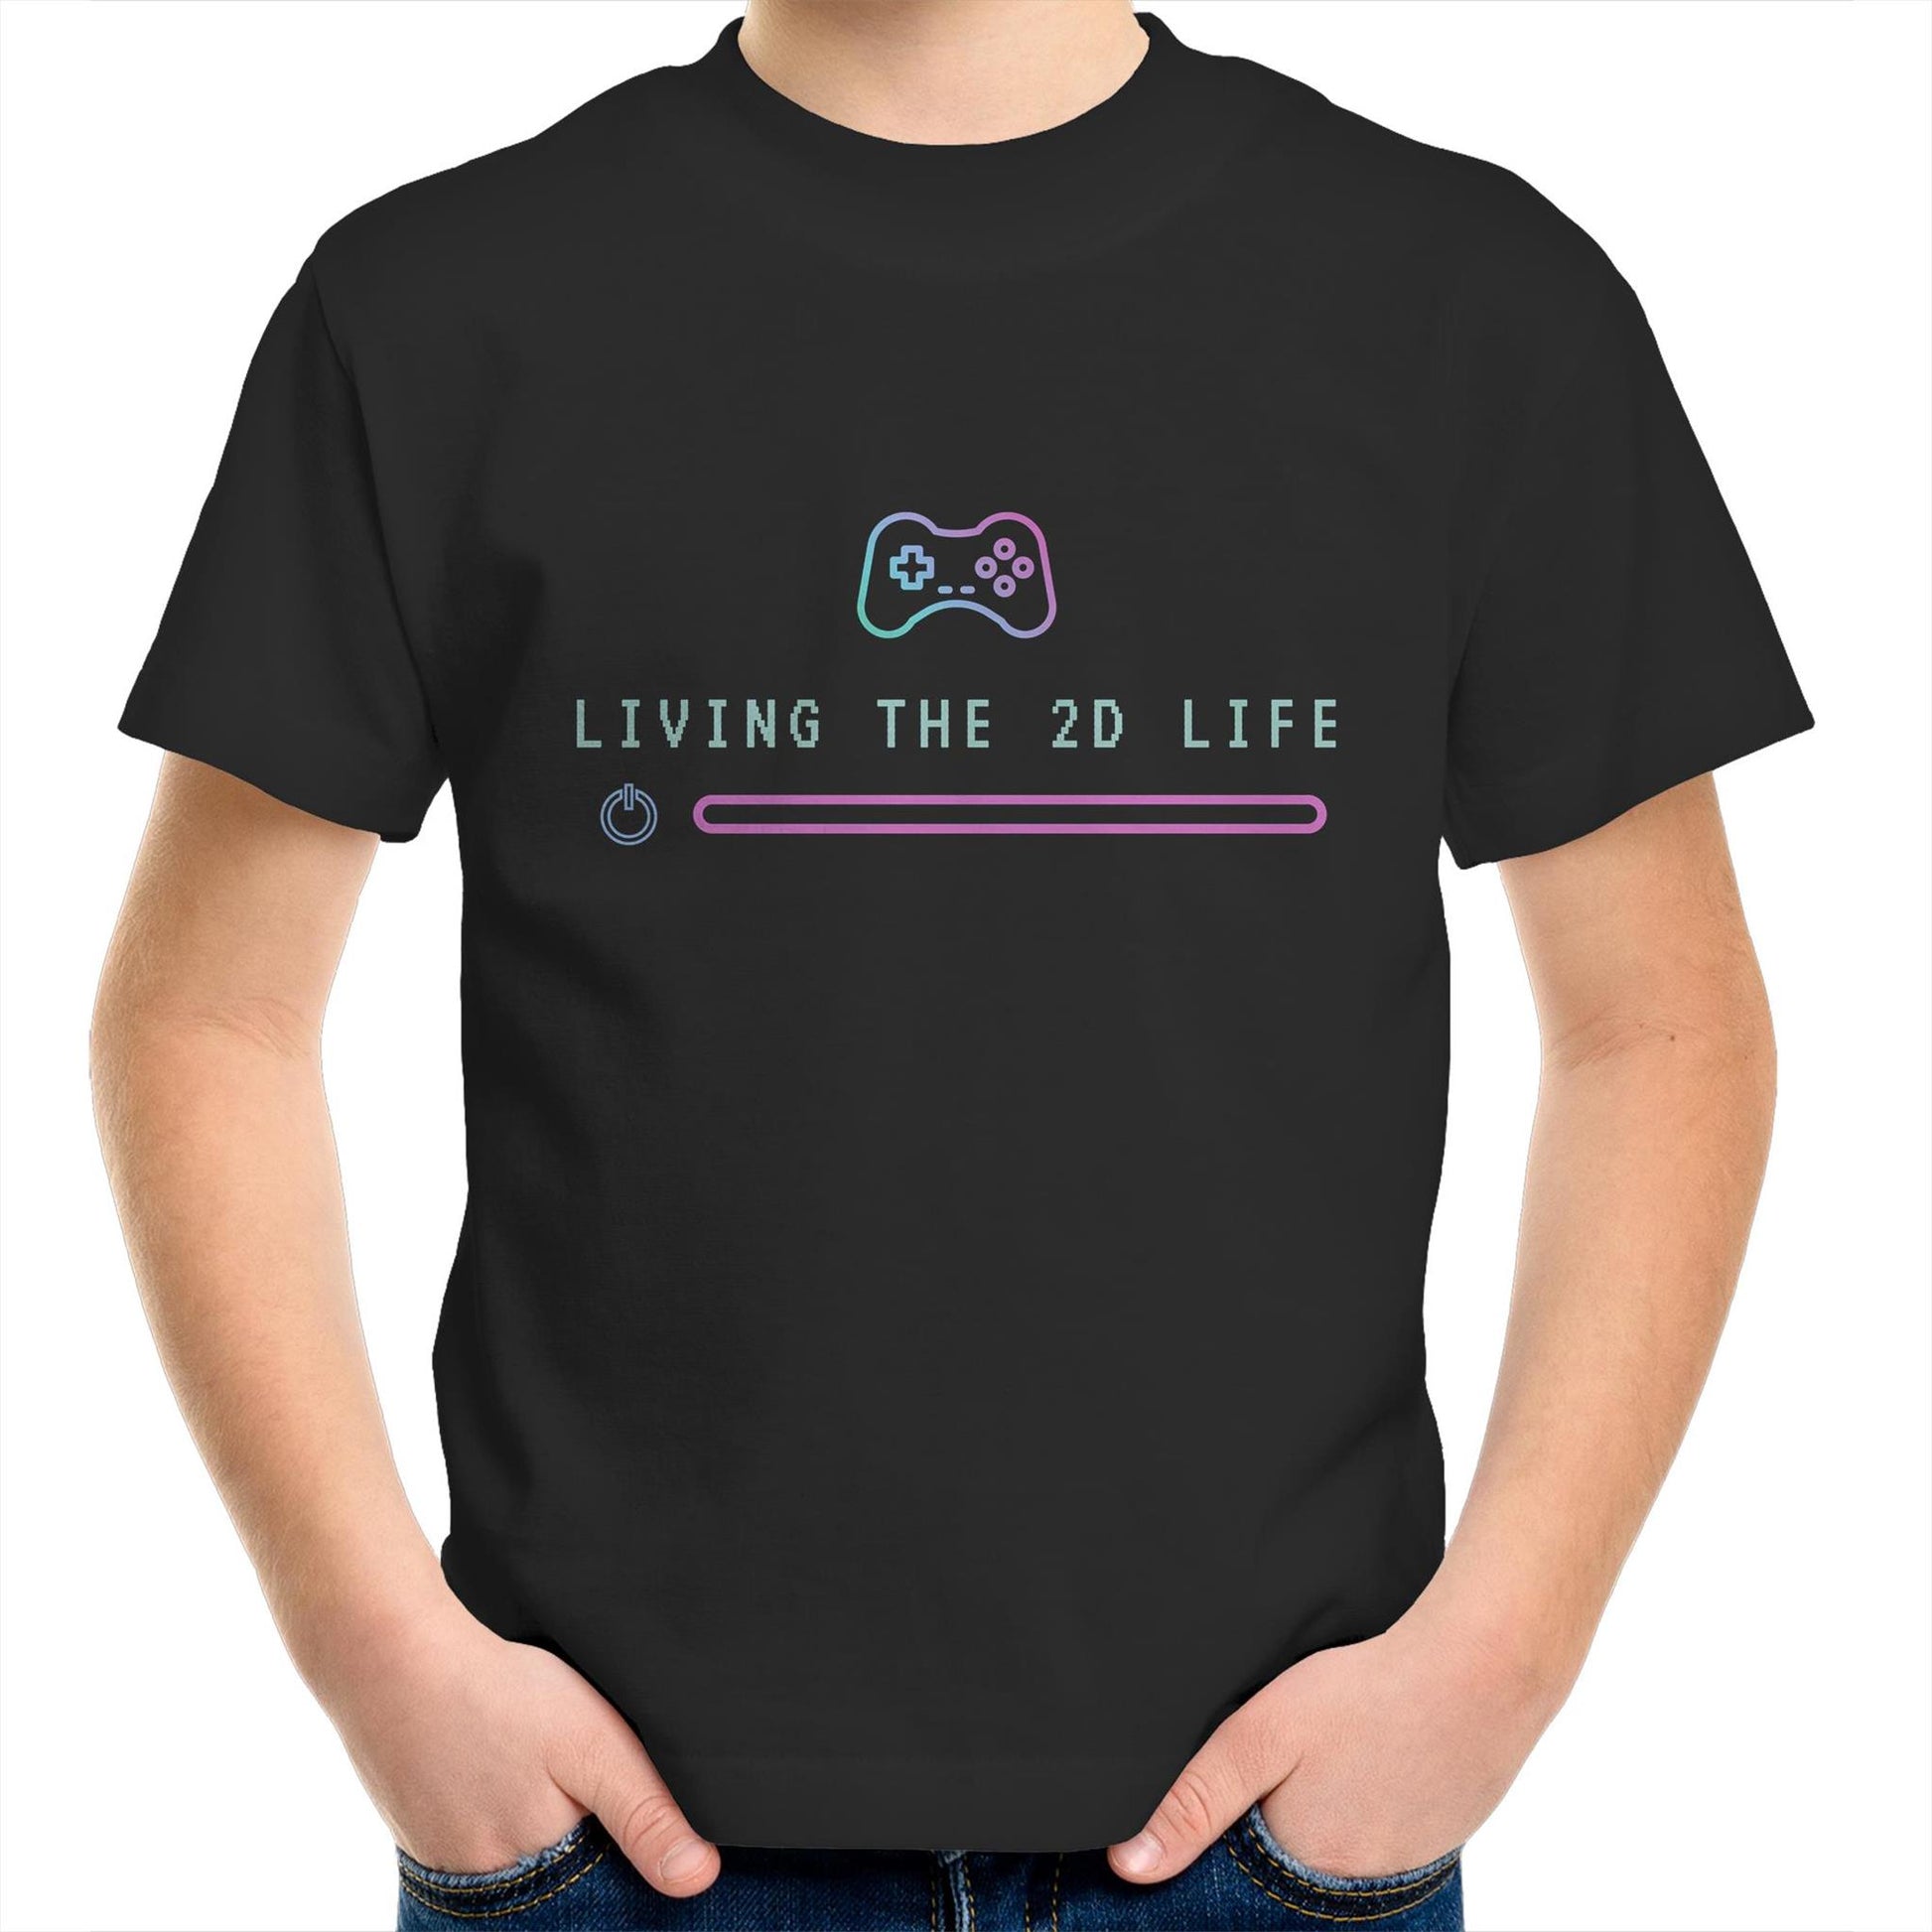 Living The 2D Life - Kids Youth Crew T-Shirt Black Kids Youth T-shirt Games Tech